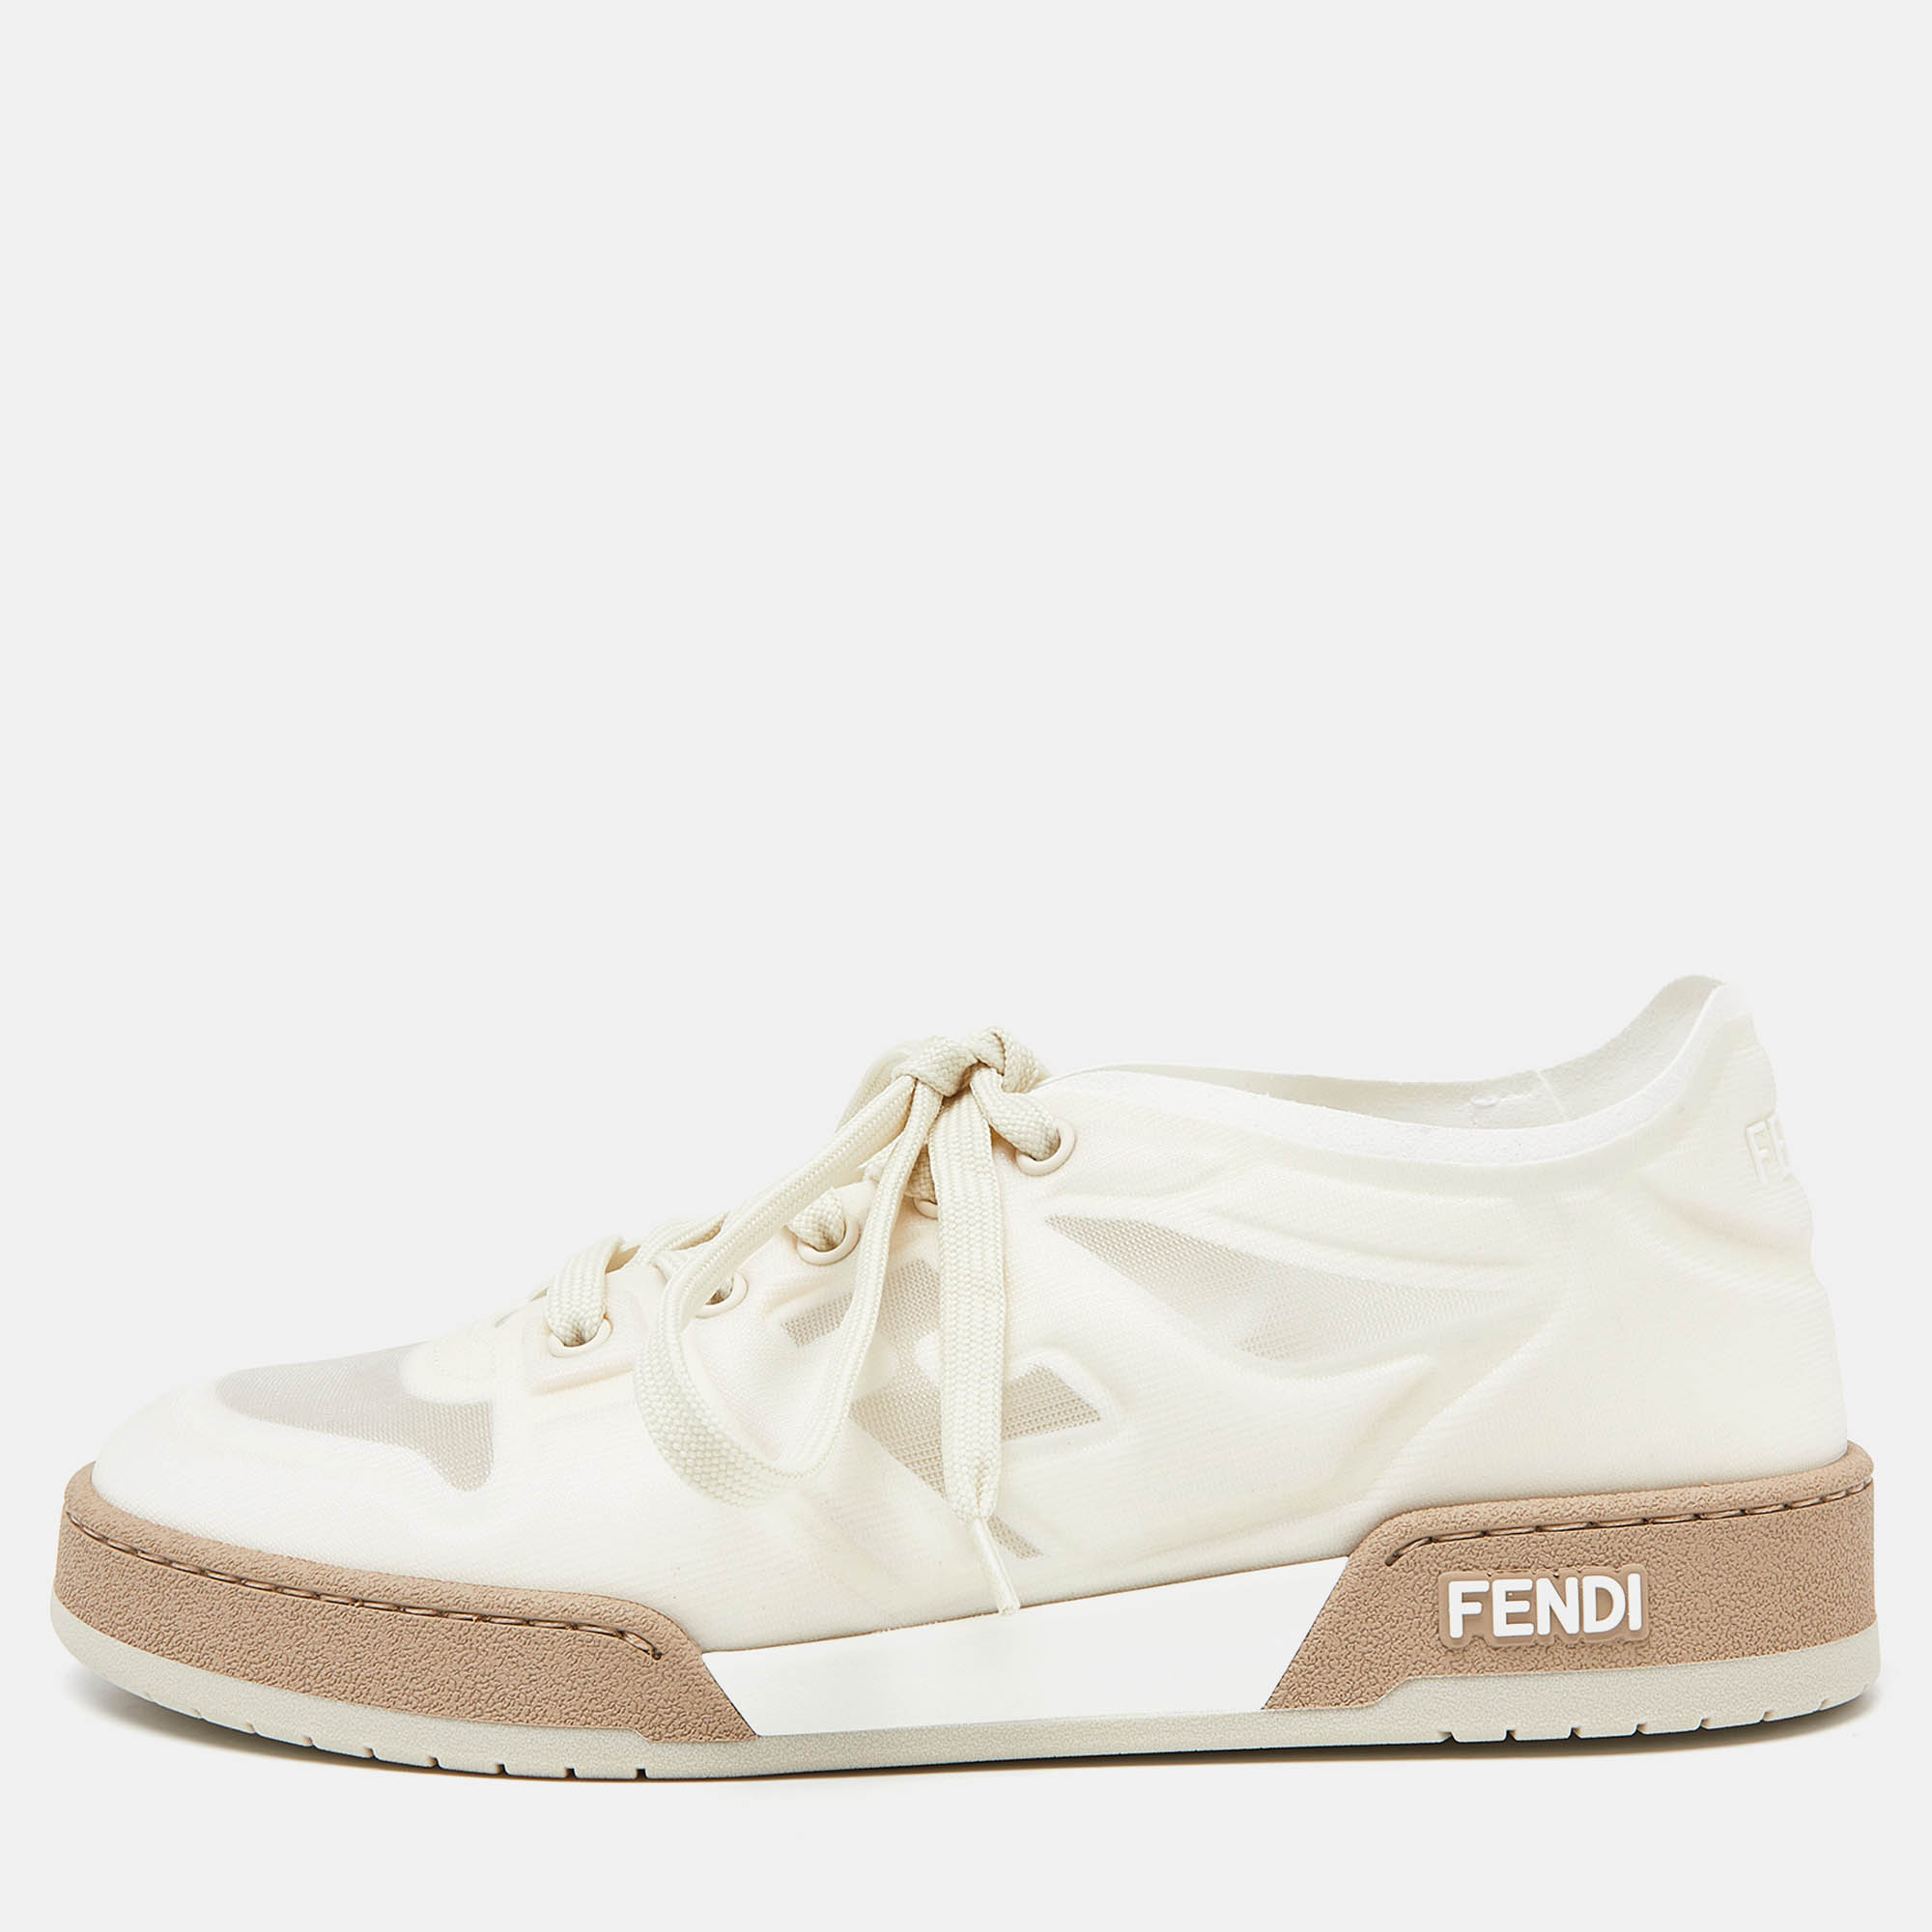 Fendi white/cream mesh match low top sneakers size 39